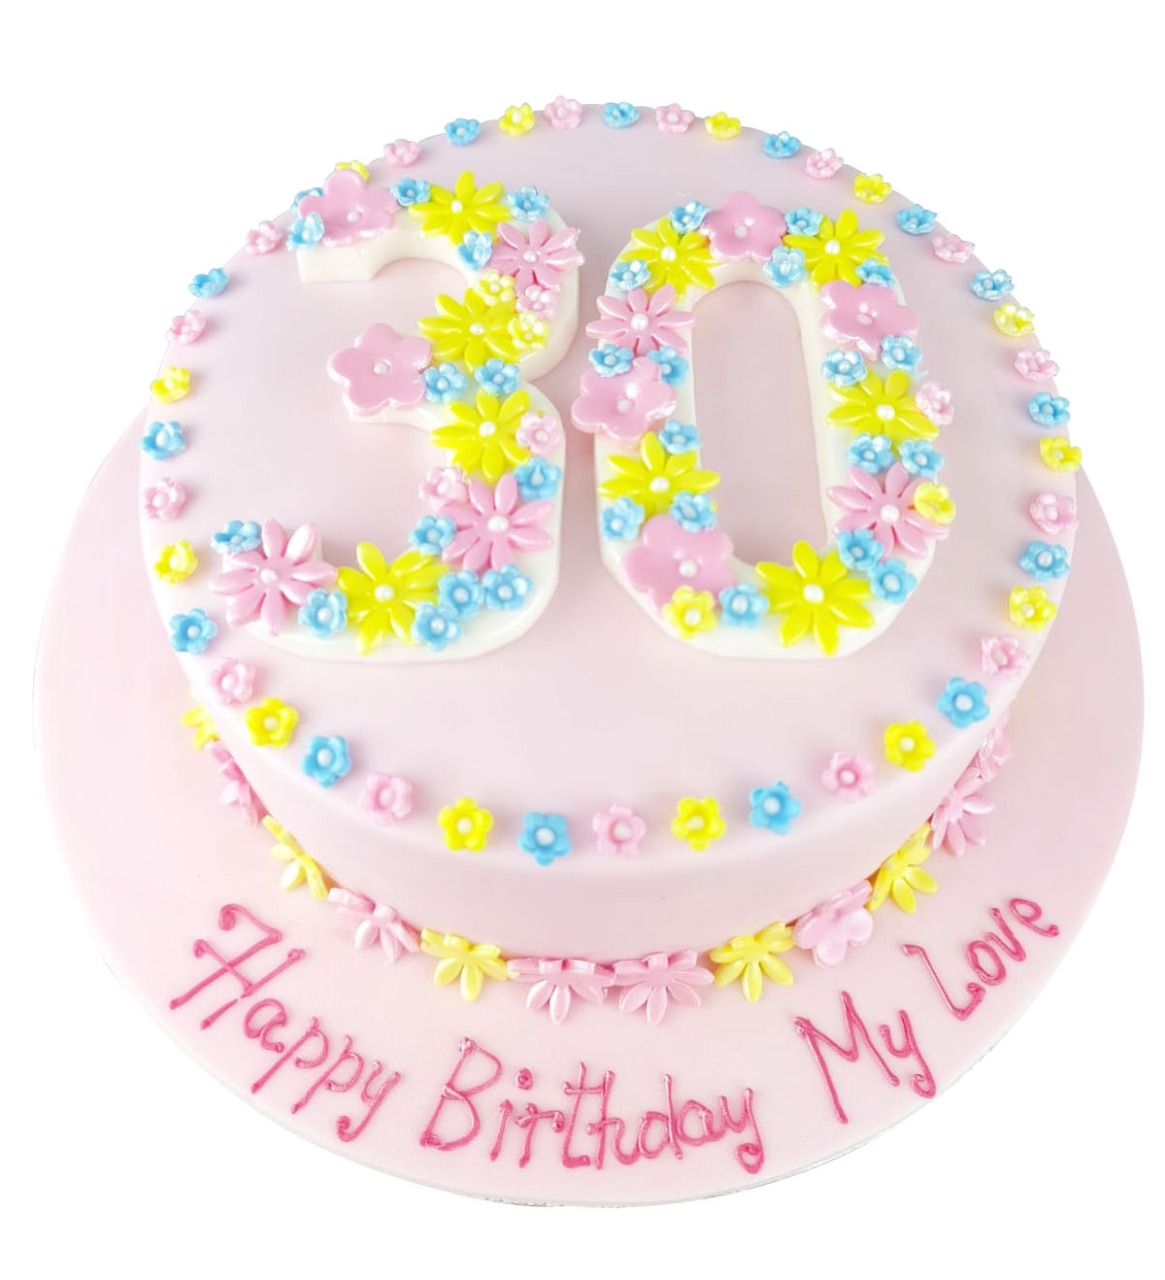 Adult Lady Birthday Cake